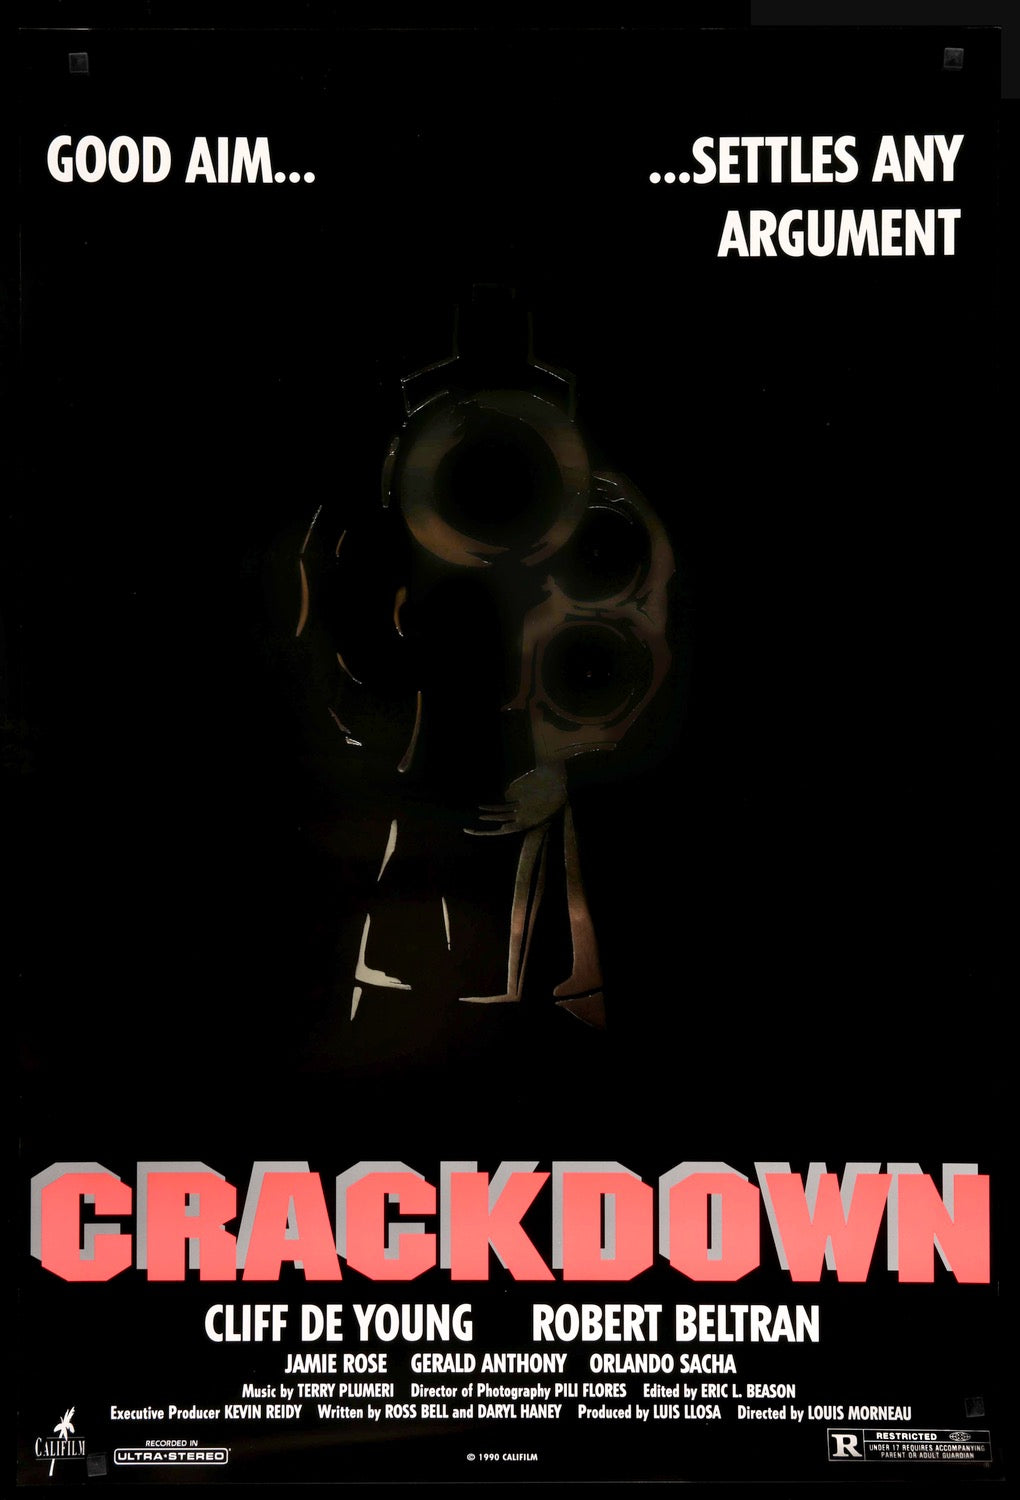 Crackdown (1991) original movie poster for sale at Original Film Art